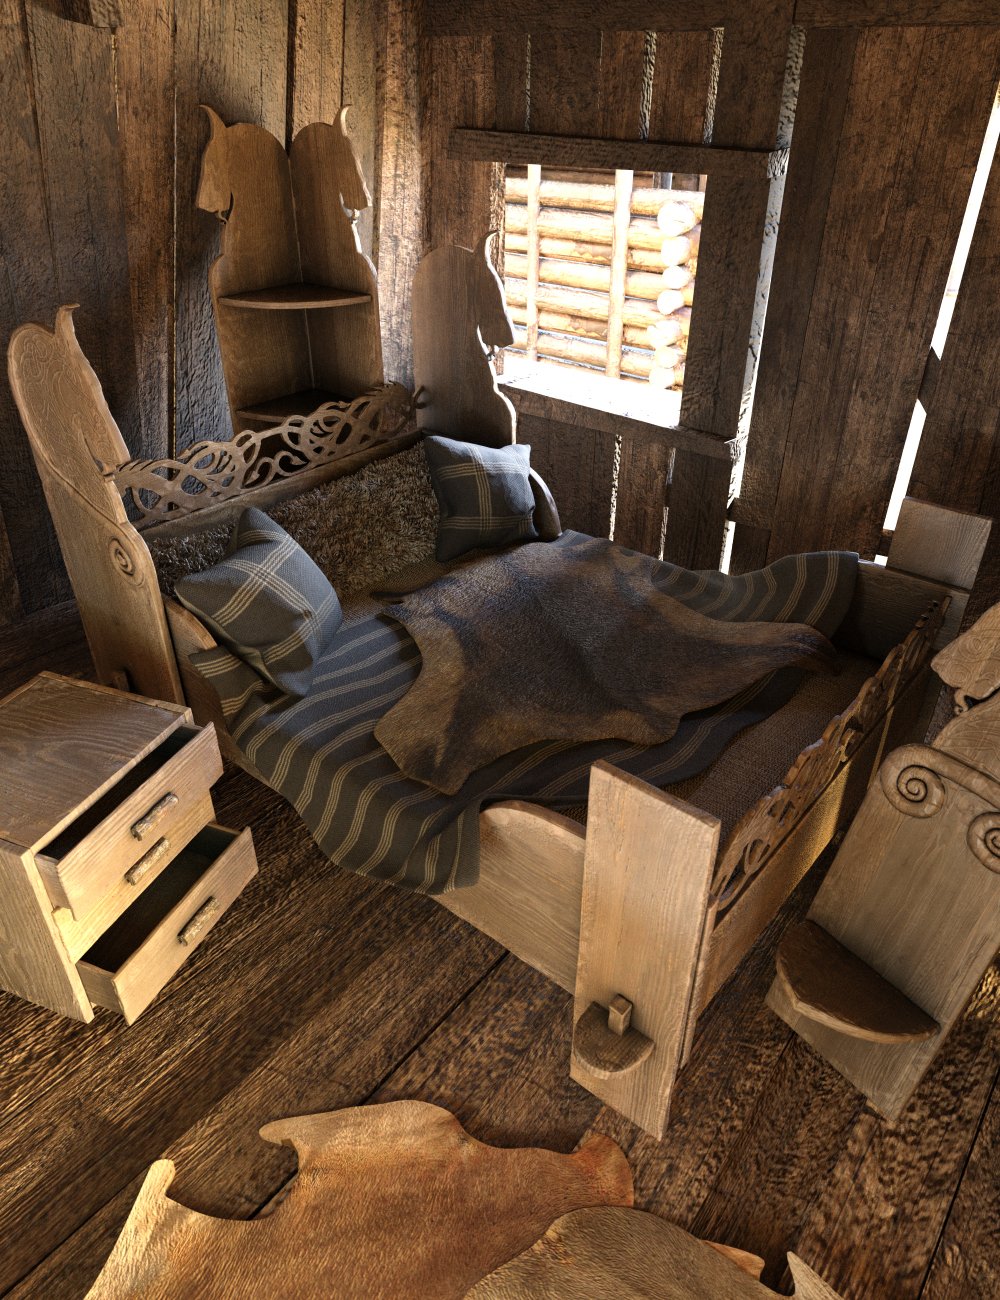 Norse Furniture by: Merlin Studios, 3D Models by Daz 3D